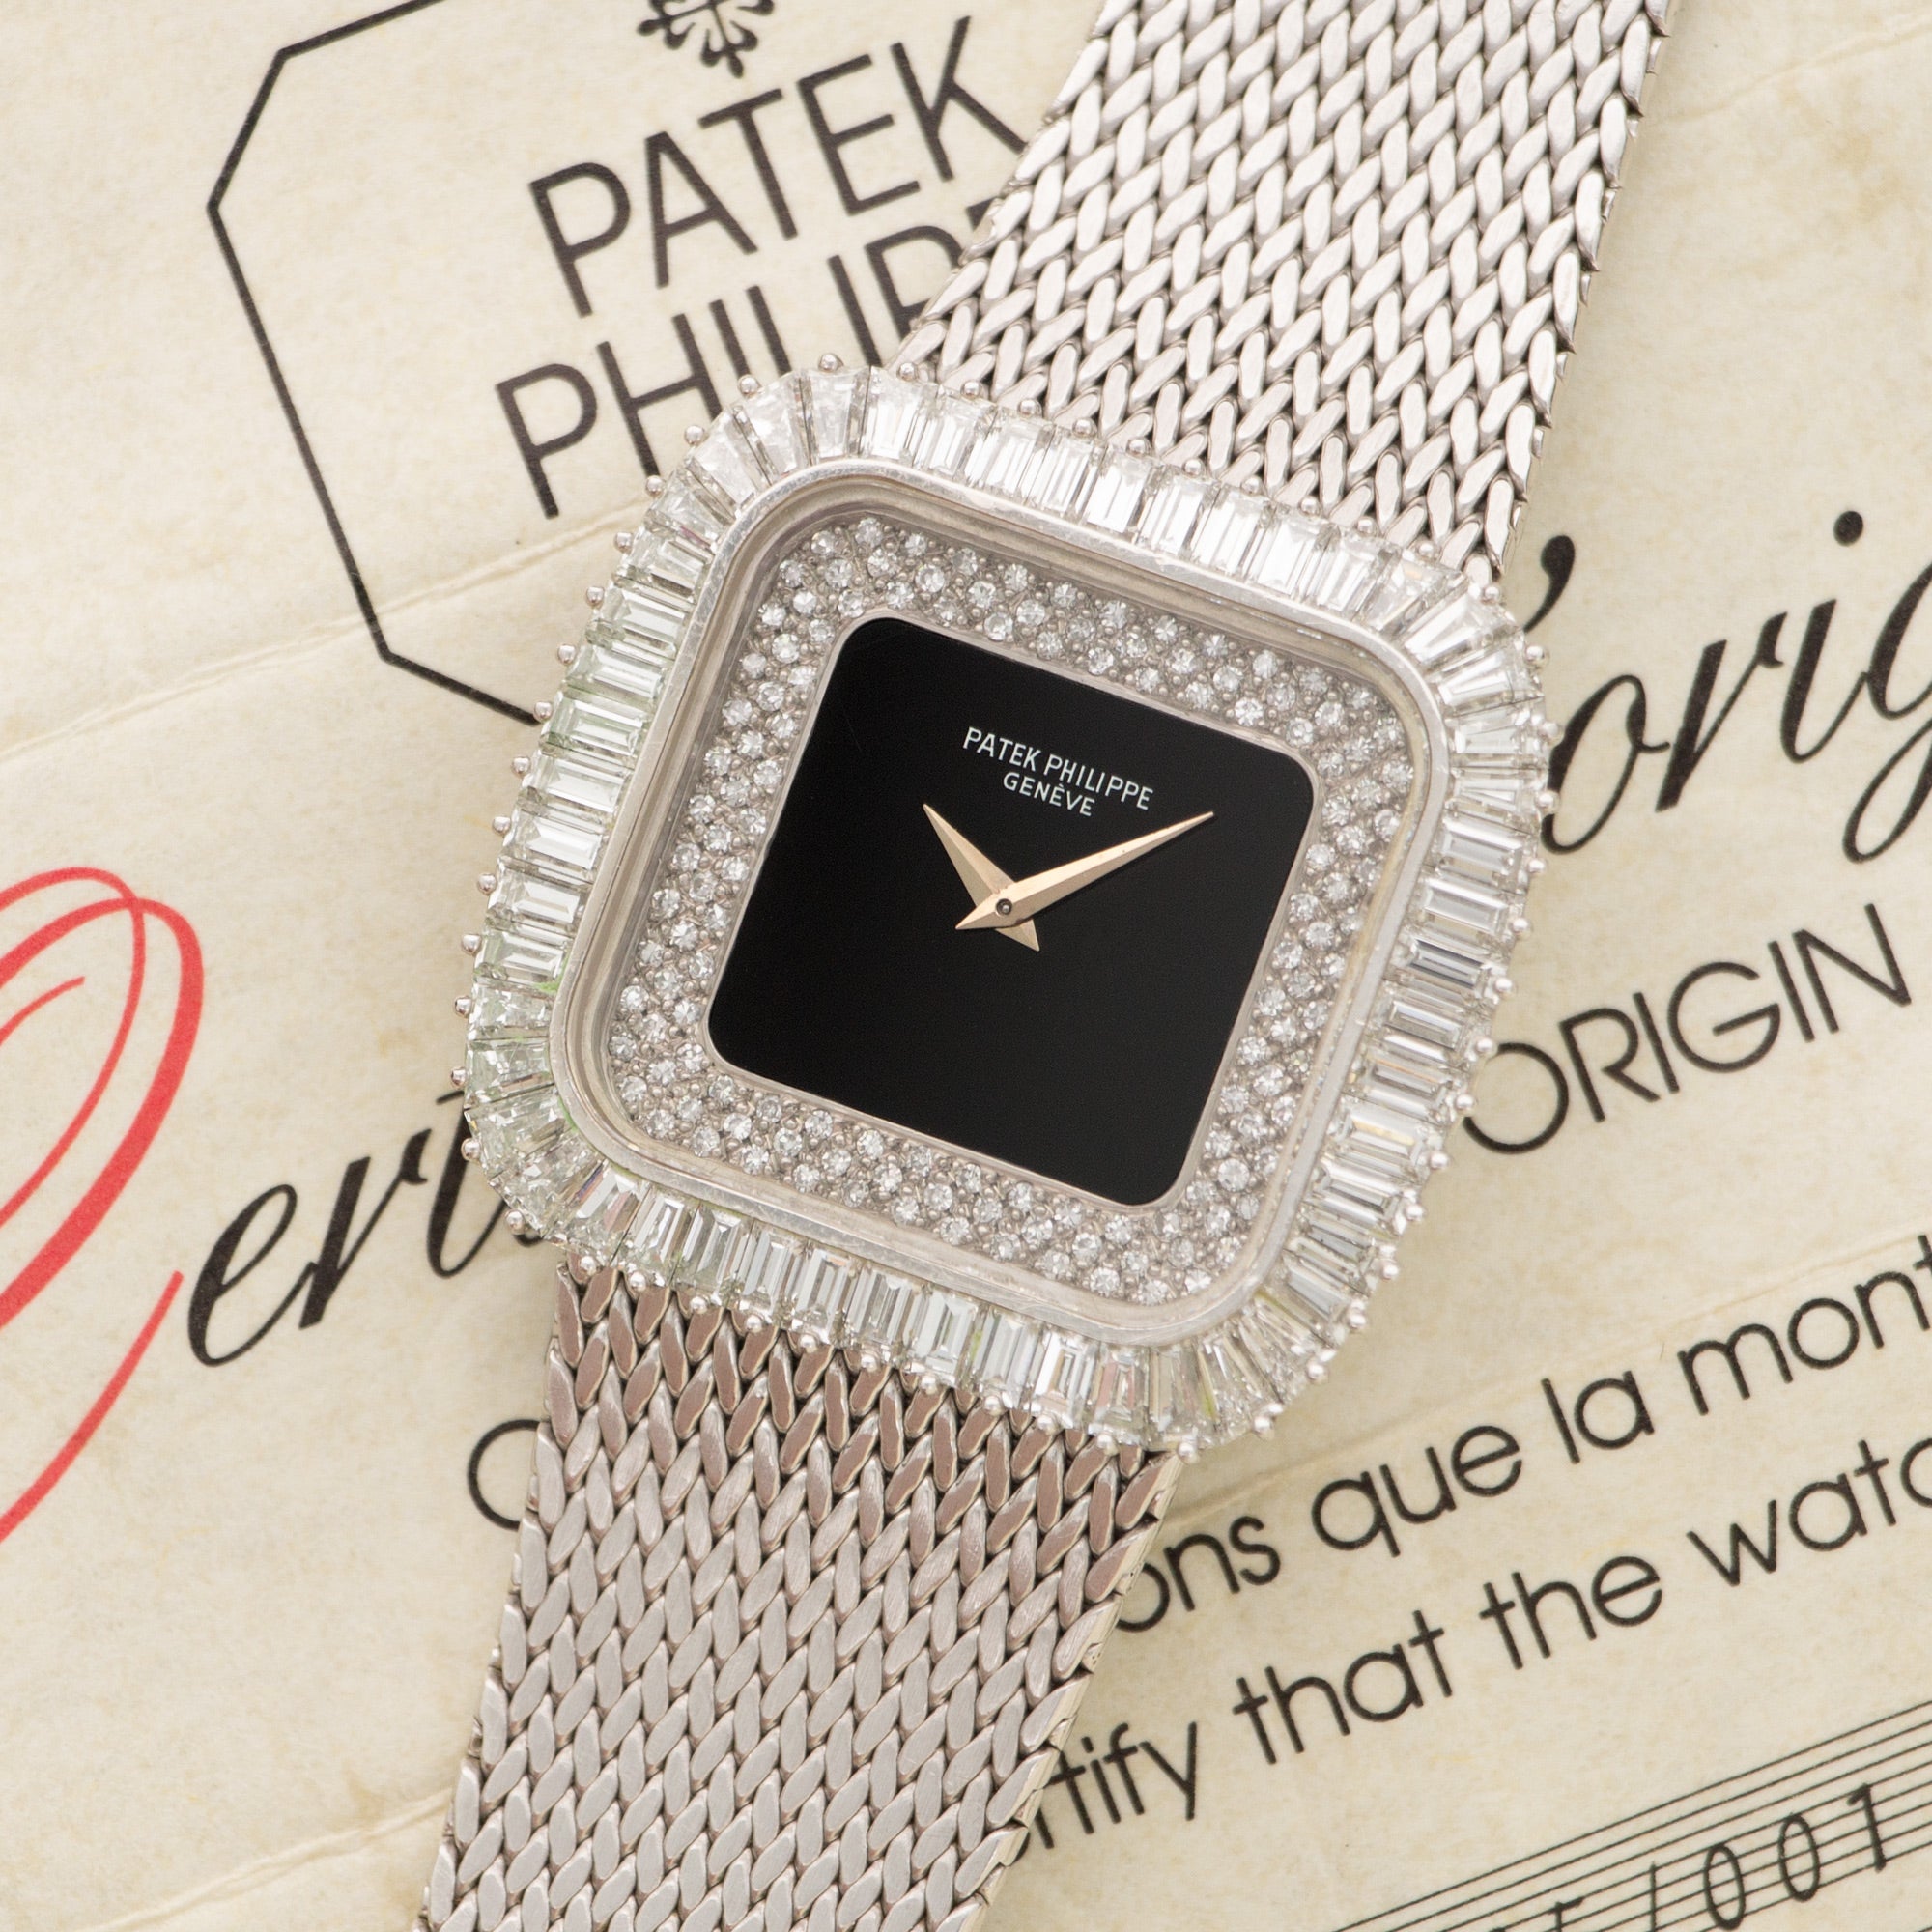 Patek Philippe - Patek Philippe Whtie Gold Baguette Diamond Watch Ref. 3625 - The Keystone Watches